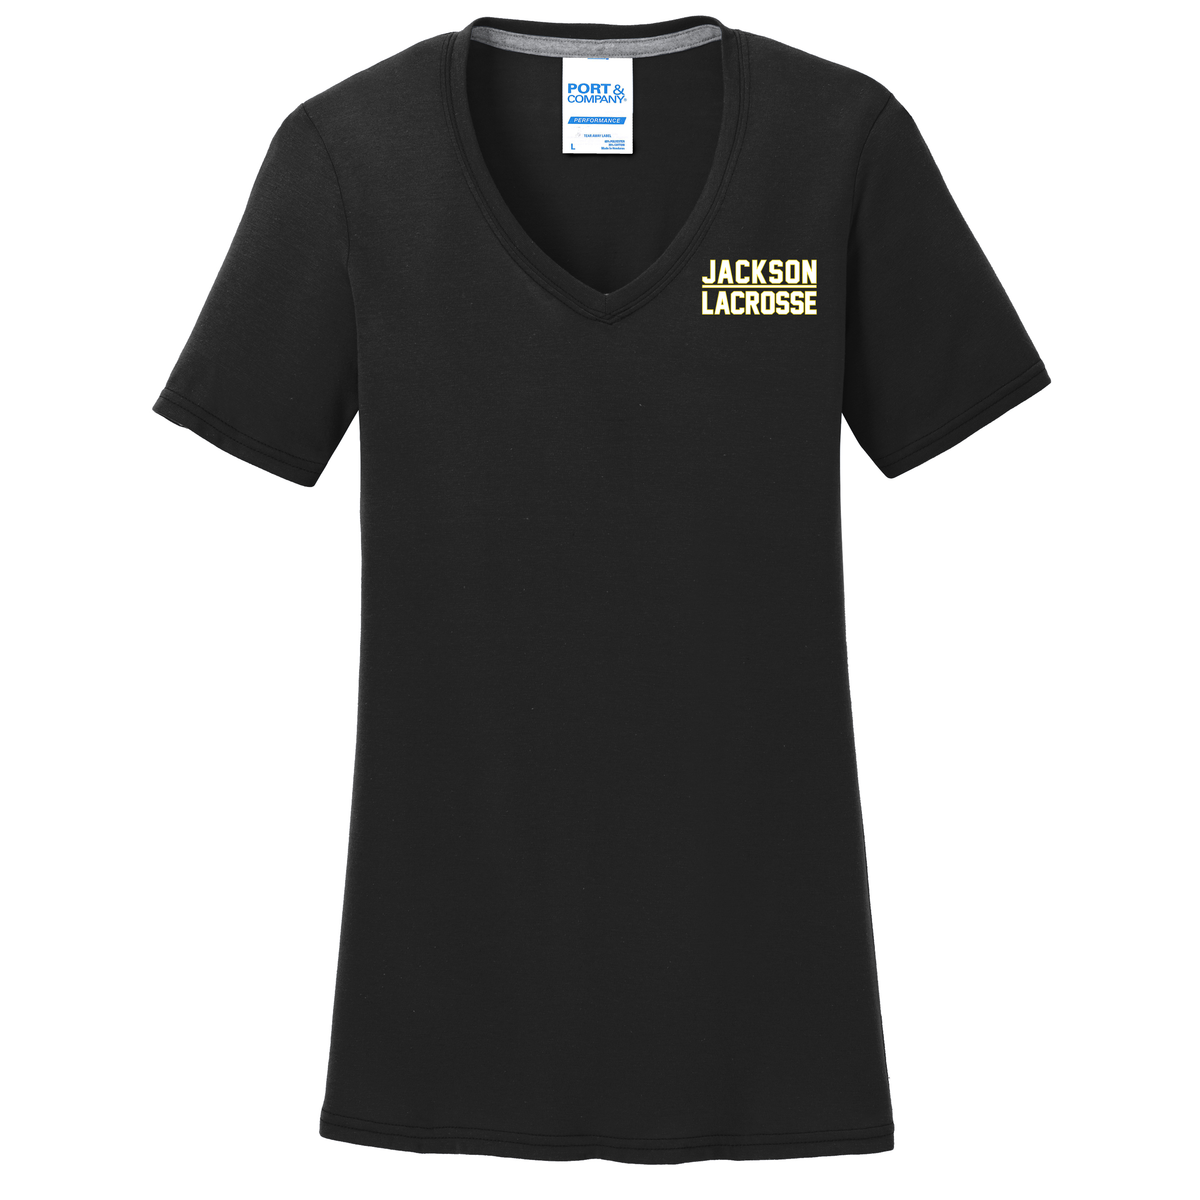 Jackson Lacrosse Women's T-Shirt